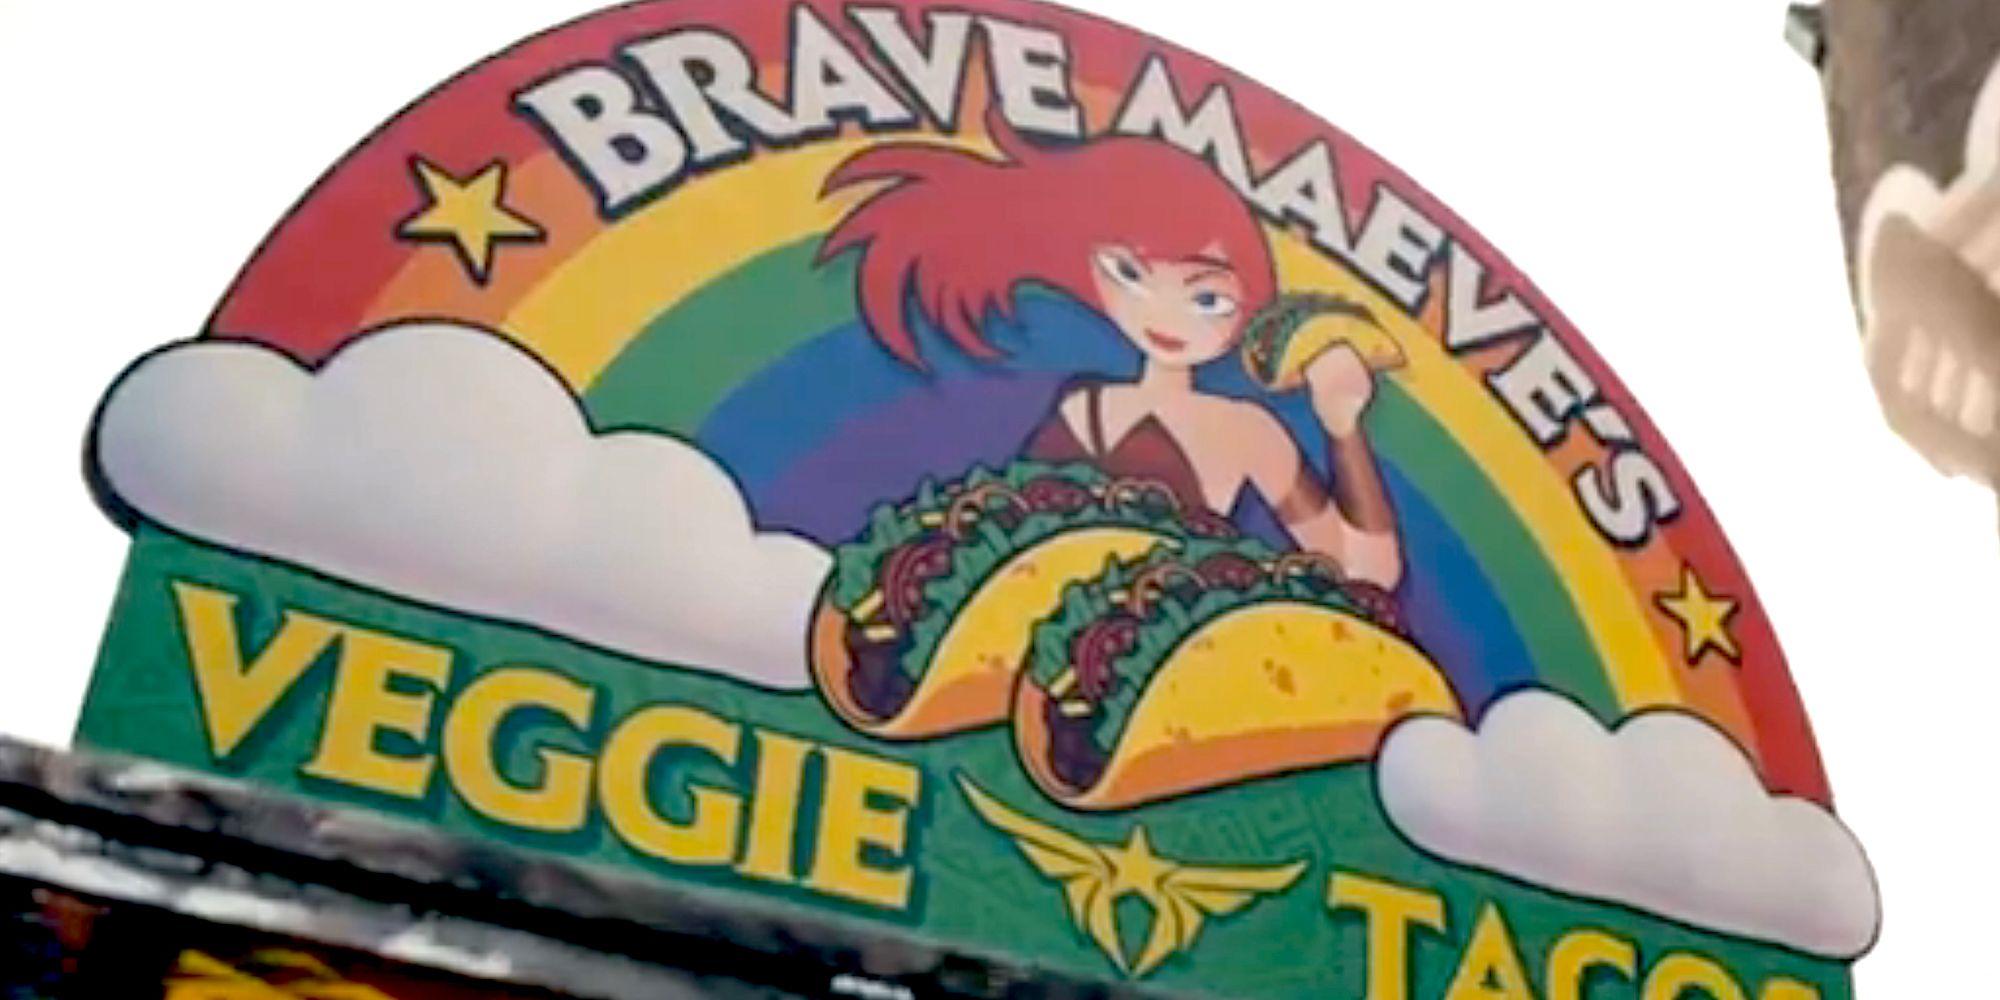 Brave Maeve's Veggie Tacos sign in the Boys season 3 episode 2